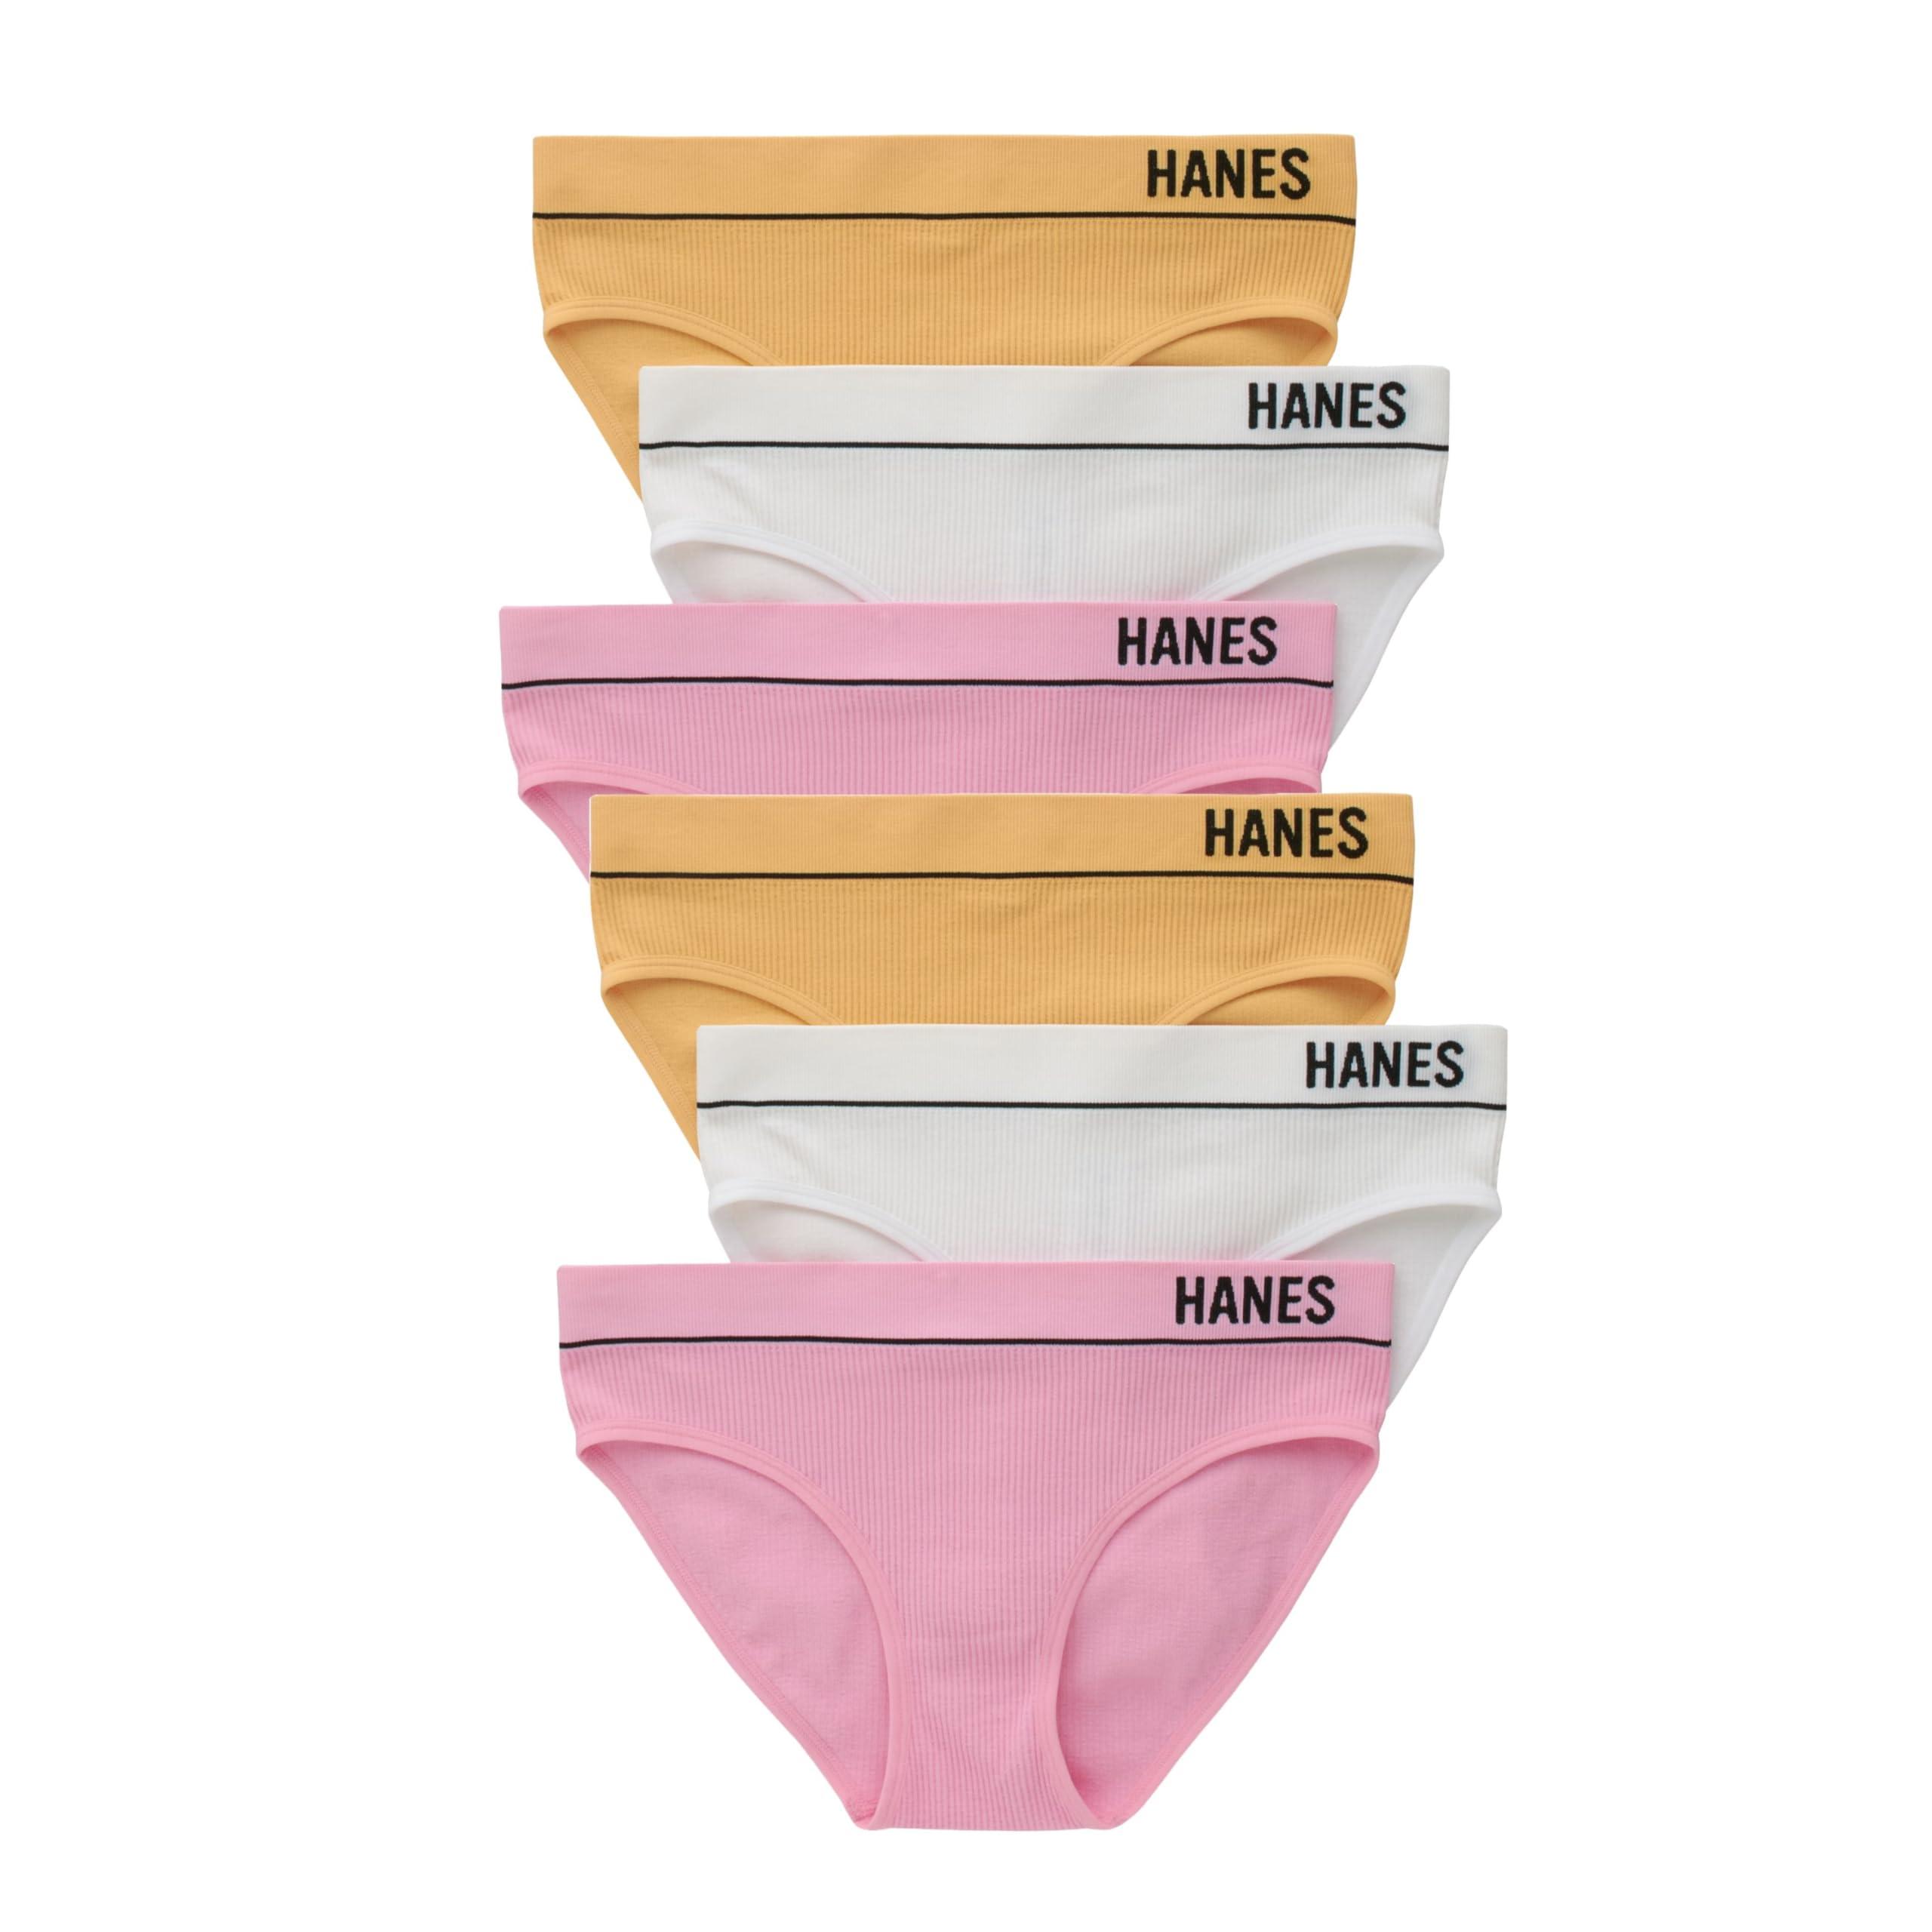 https://cdna.lystit.com/photos/amazon-prime/4f86a230/hanes-GoldieWhiteGumball-Pink-Originals-Seamless-Stretch-Rib-Bikini-Panties-Pack.jpeg